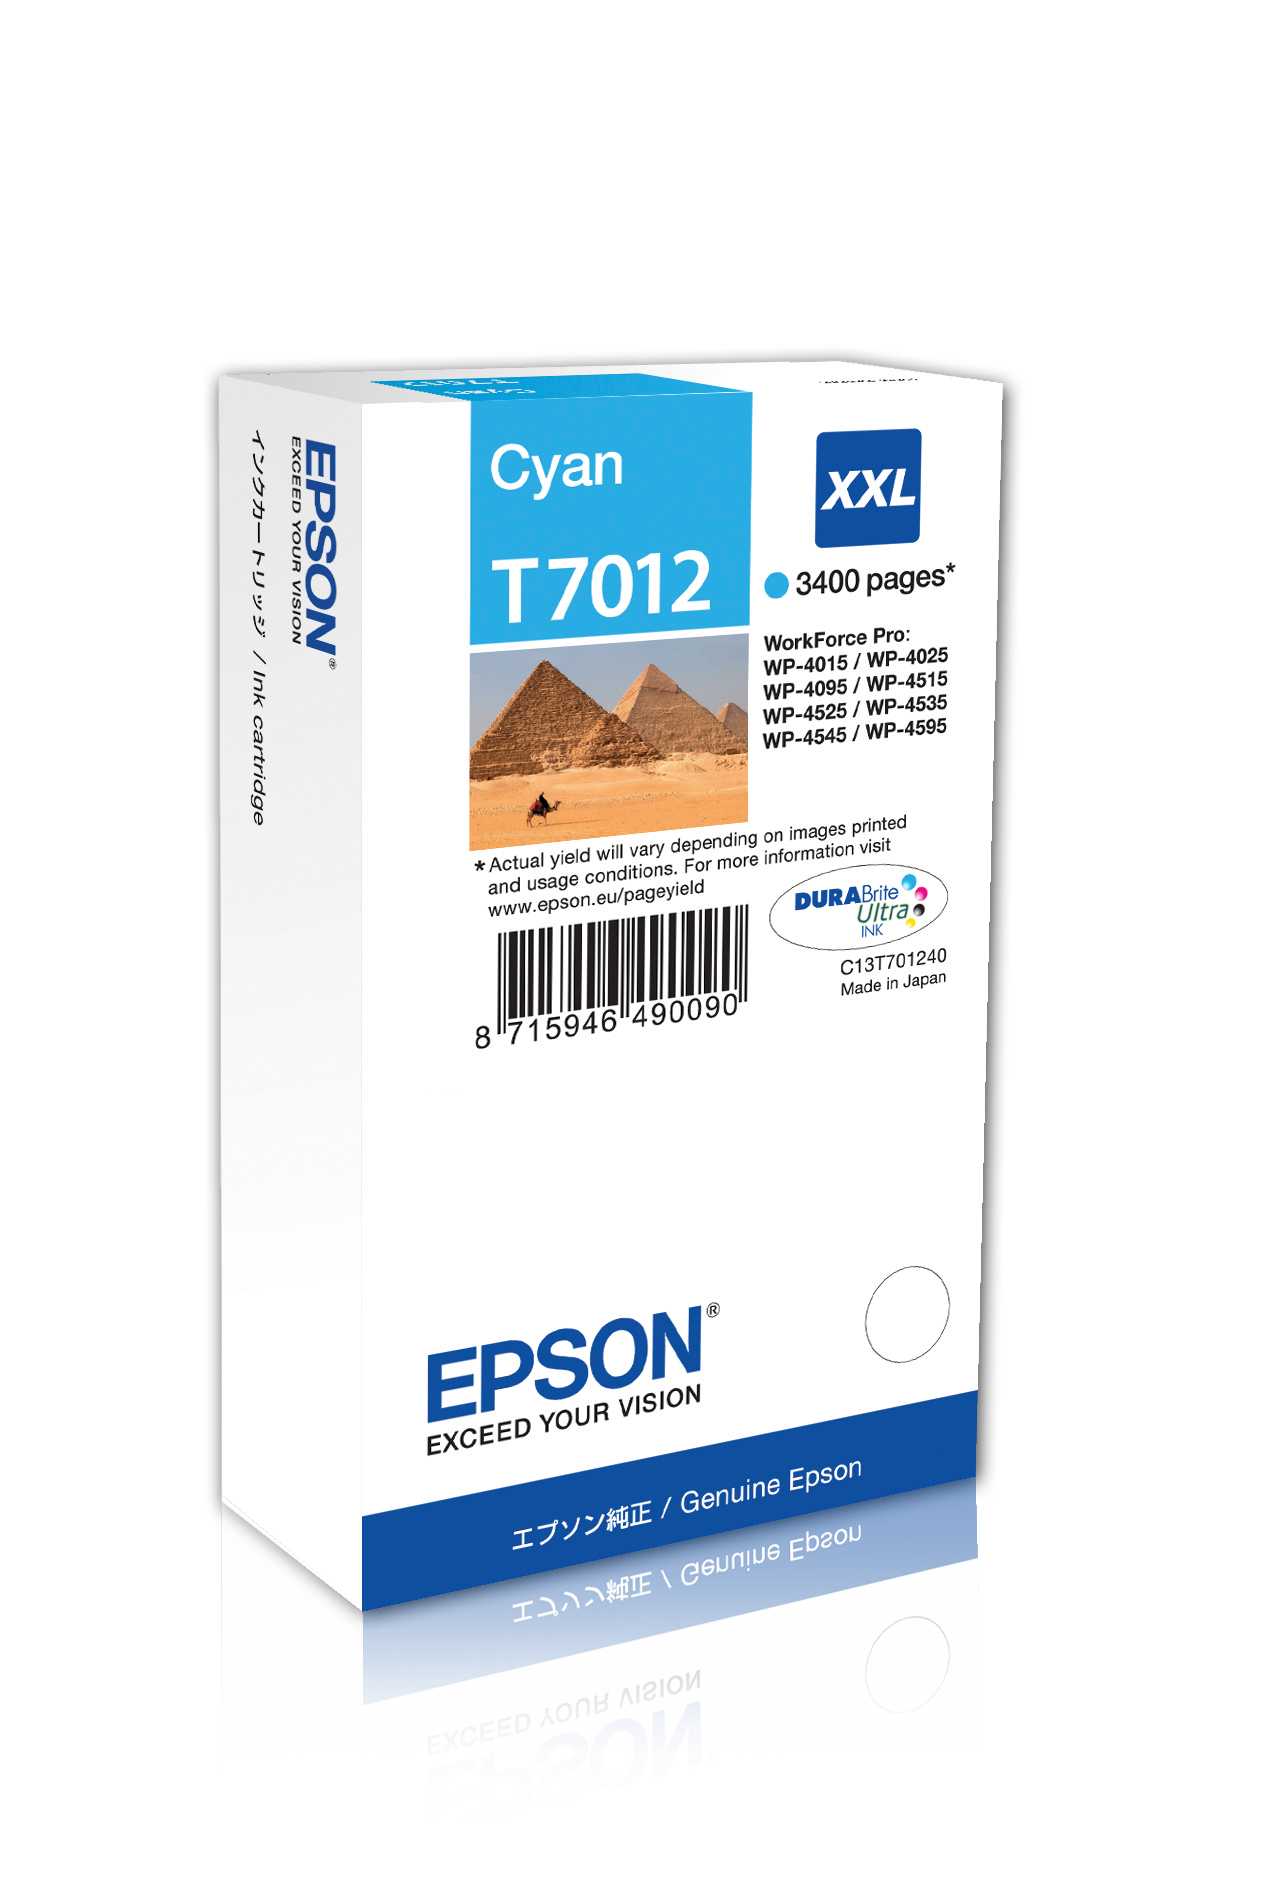 EPSON Ink Cartridge Cyan XXL WP4000 kārtridžs